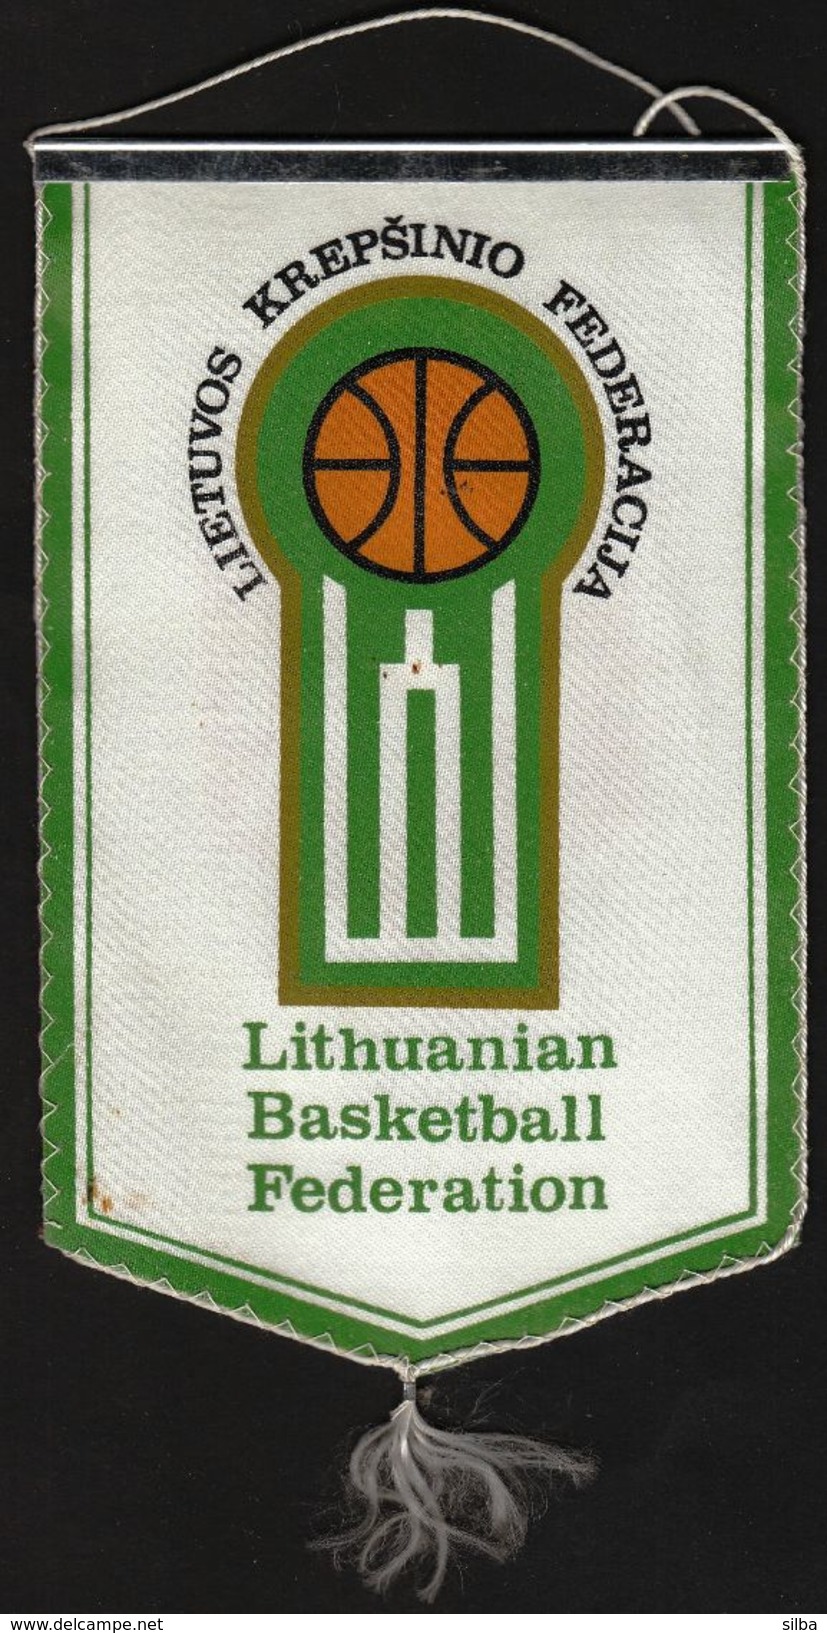 Basketball / Flag, Pennant / Lithuania / Lithuanian Basketball Federation - Apparel, Souvenirs & Other